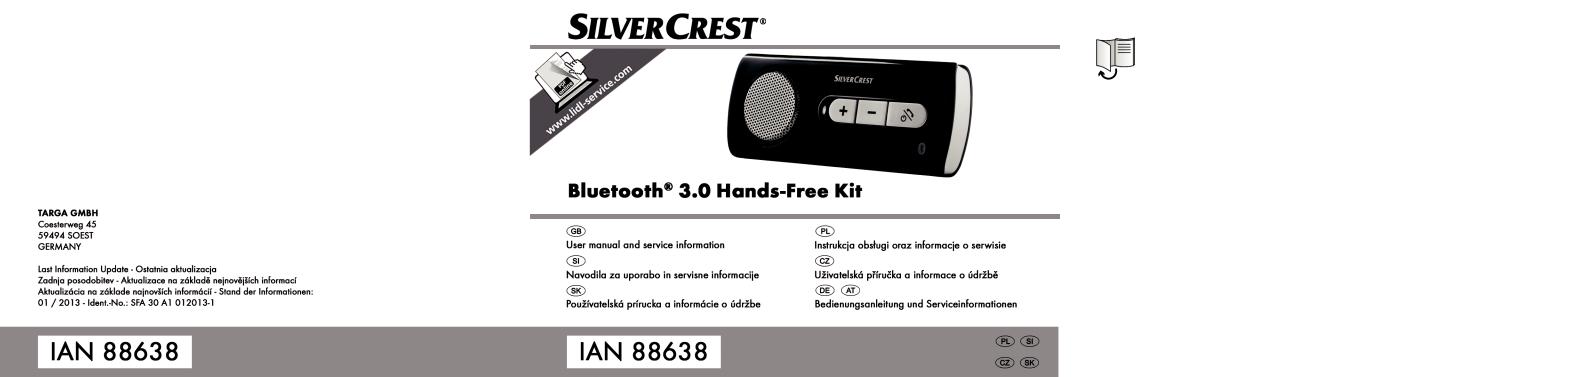 Silvercrest SFA 30 A1 User Manual